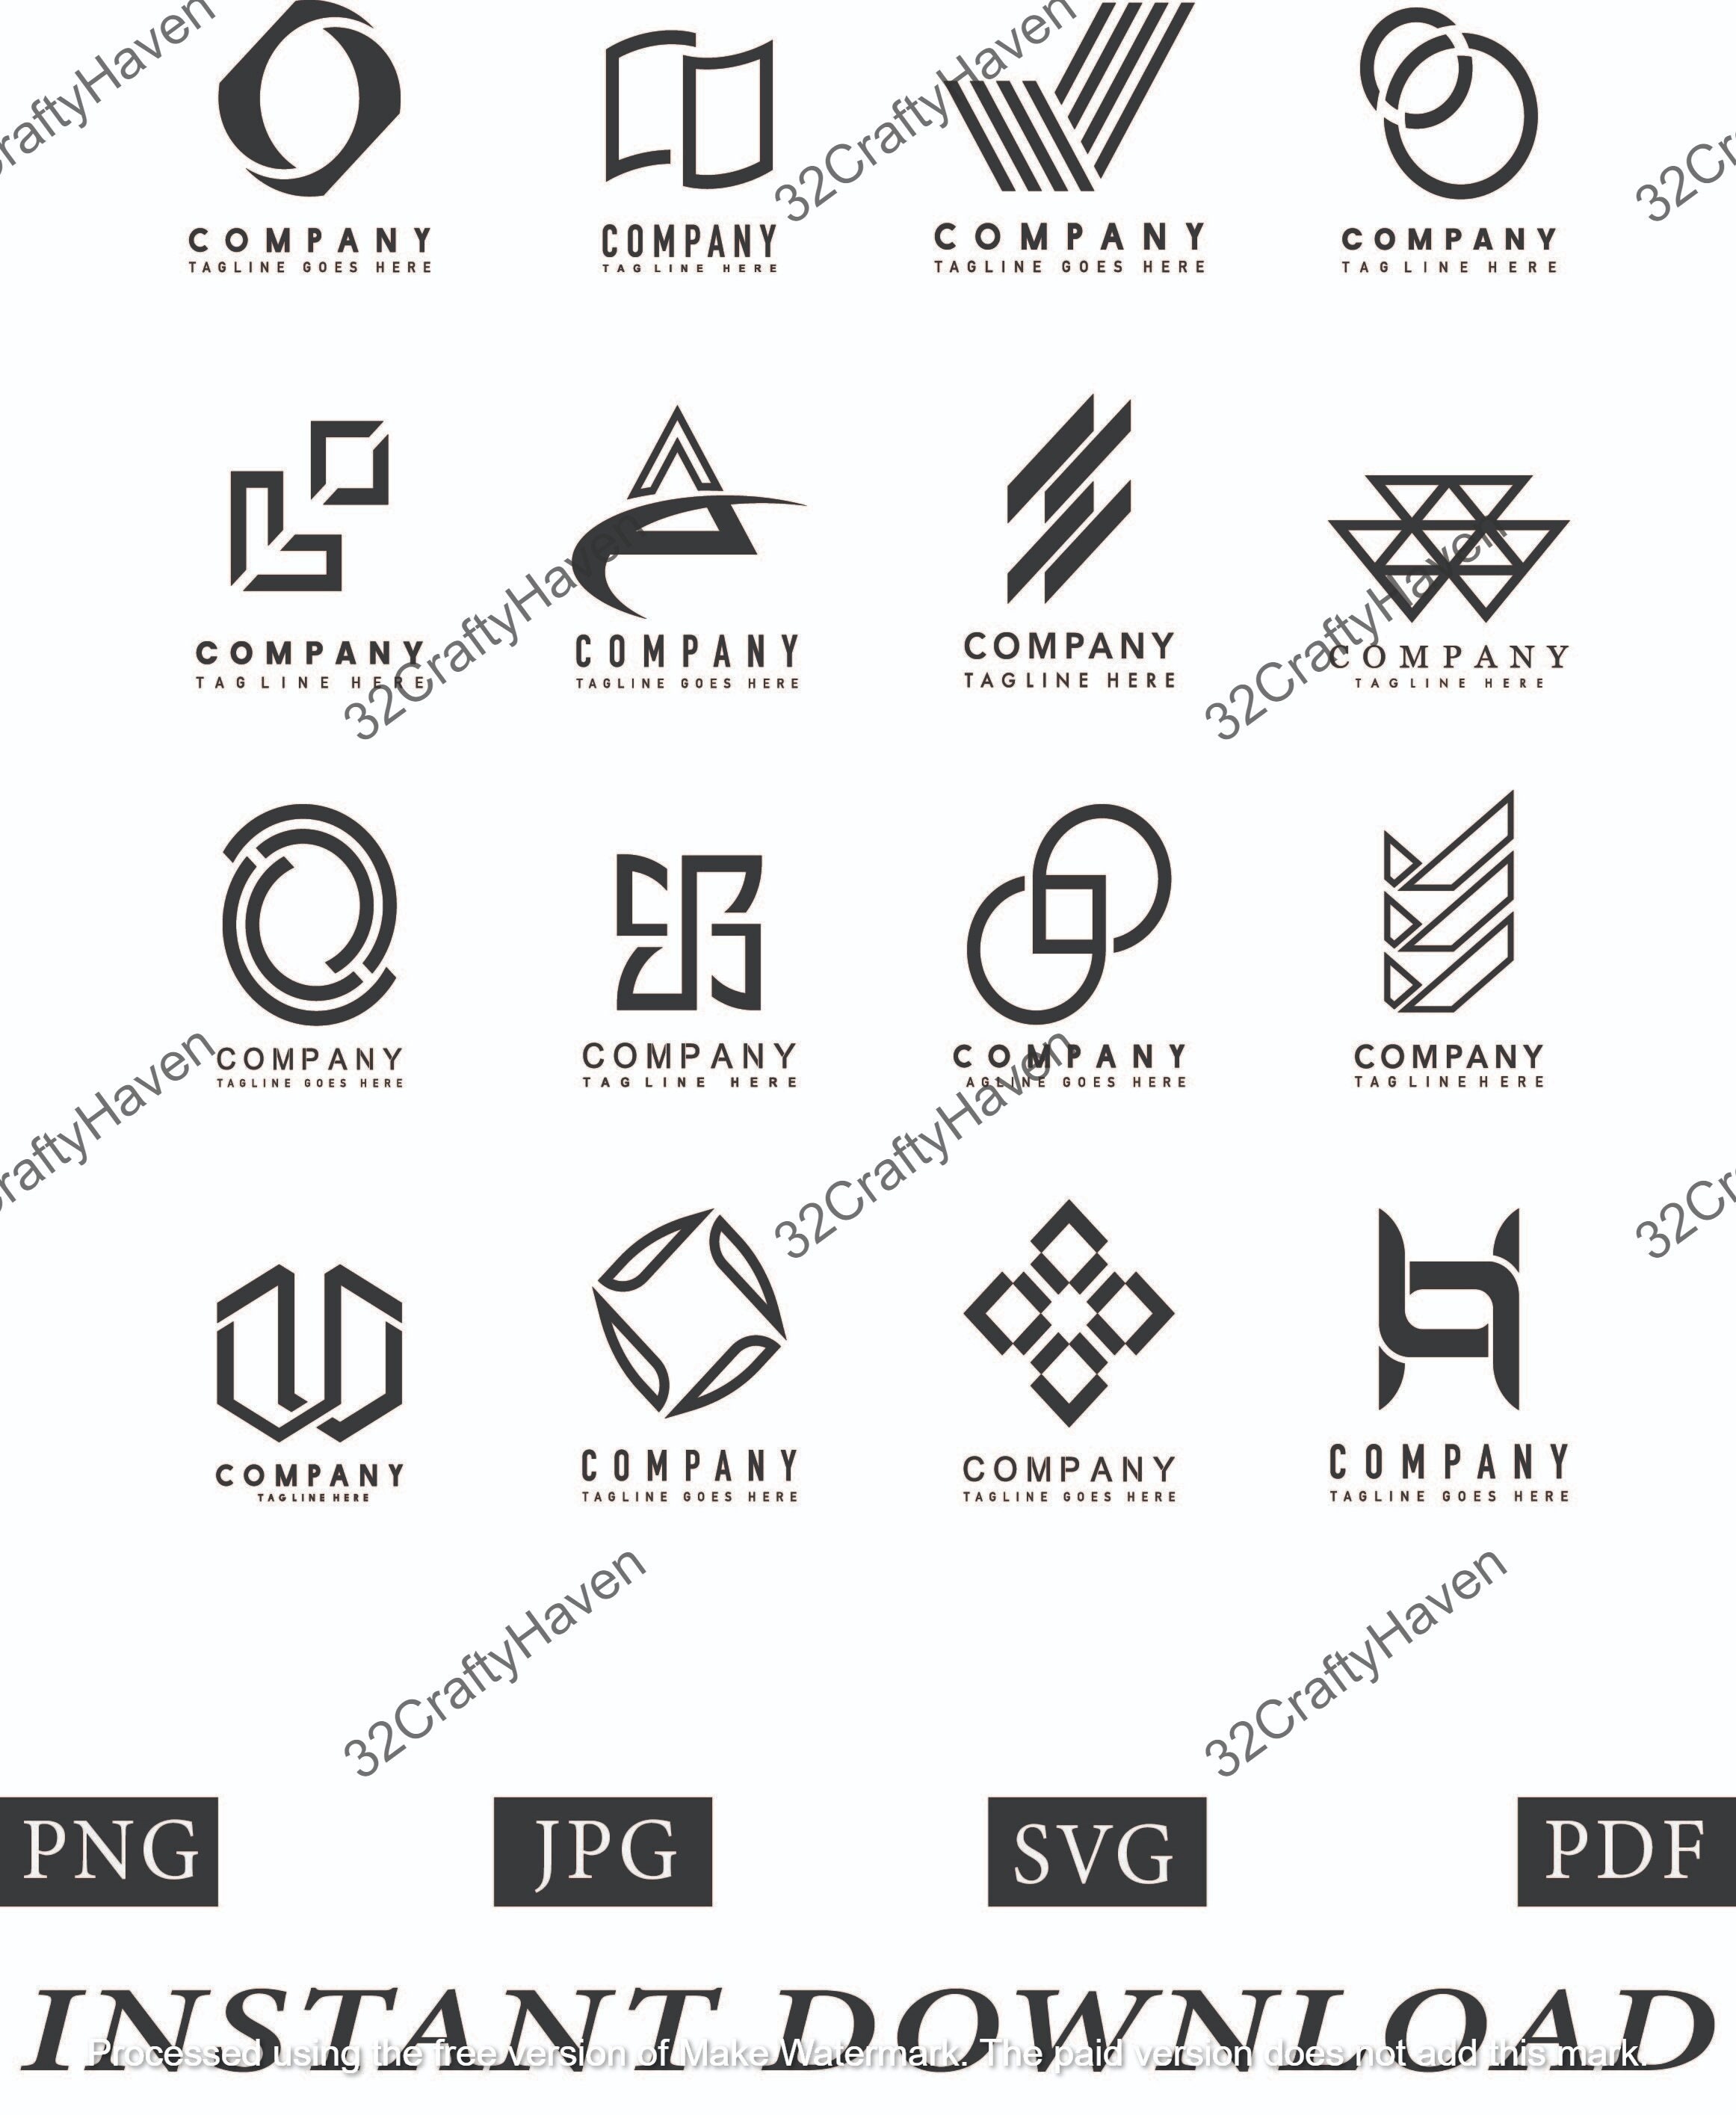 Company Logo Bundle / Instant Download / Print Cut Template / High ...